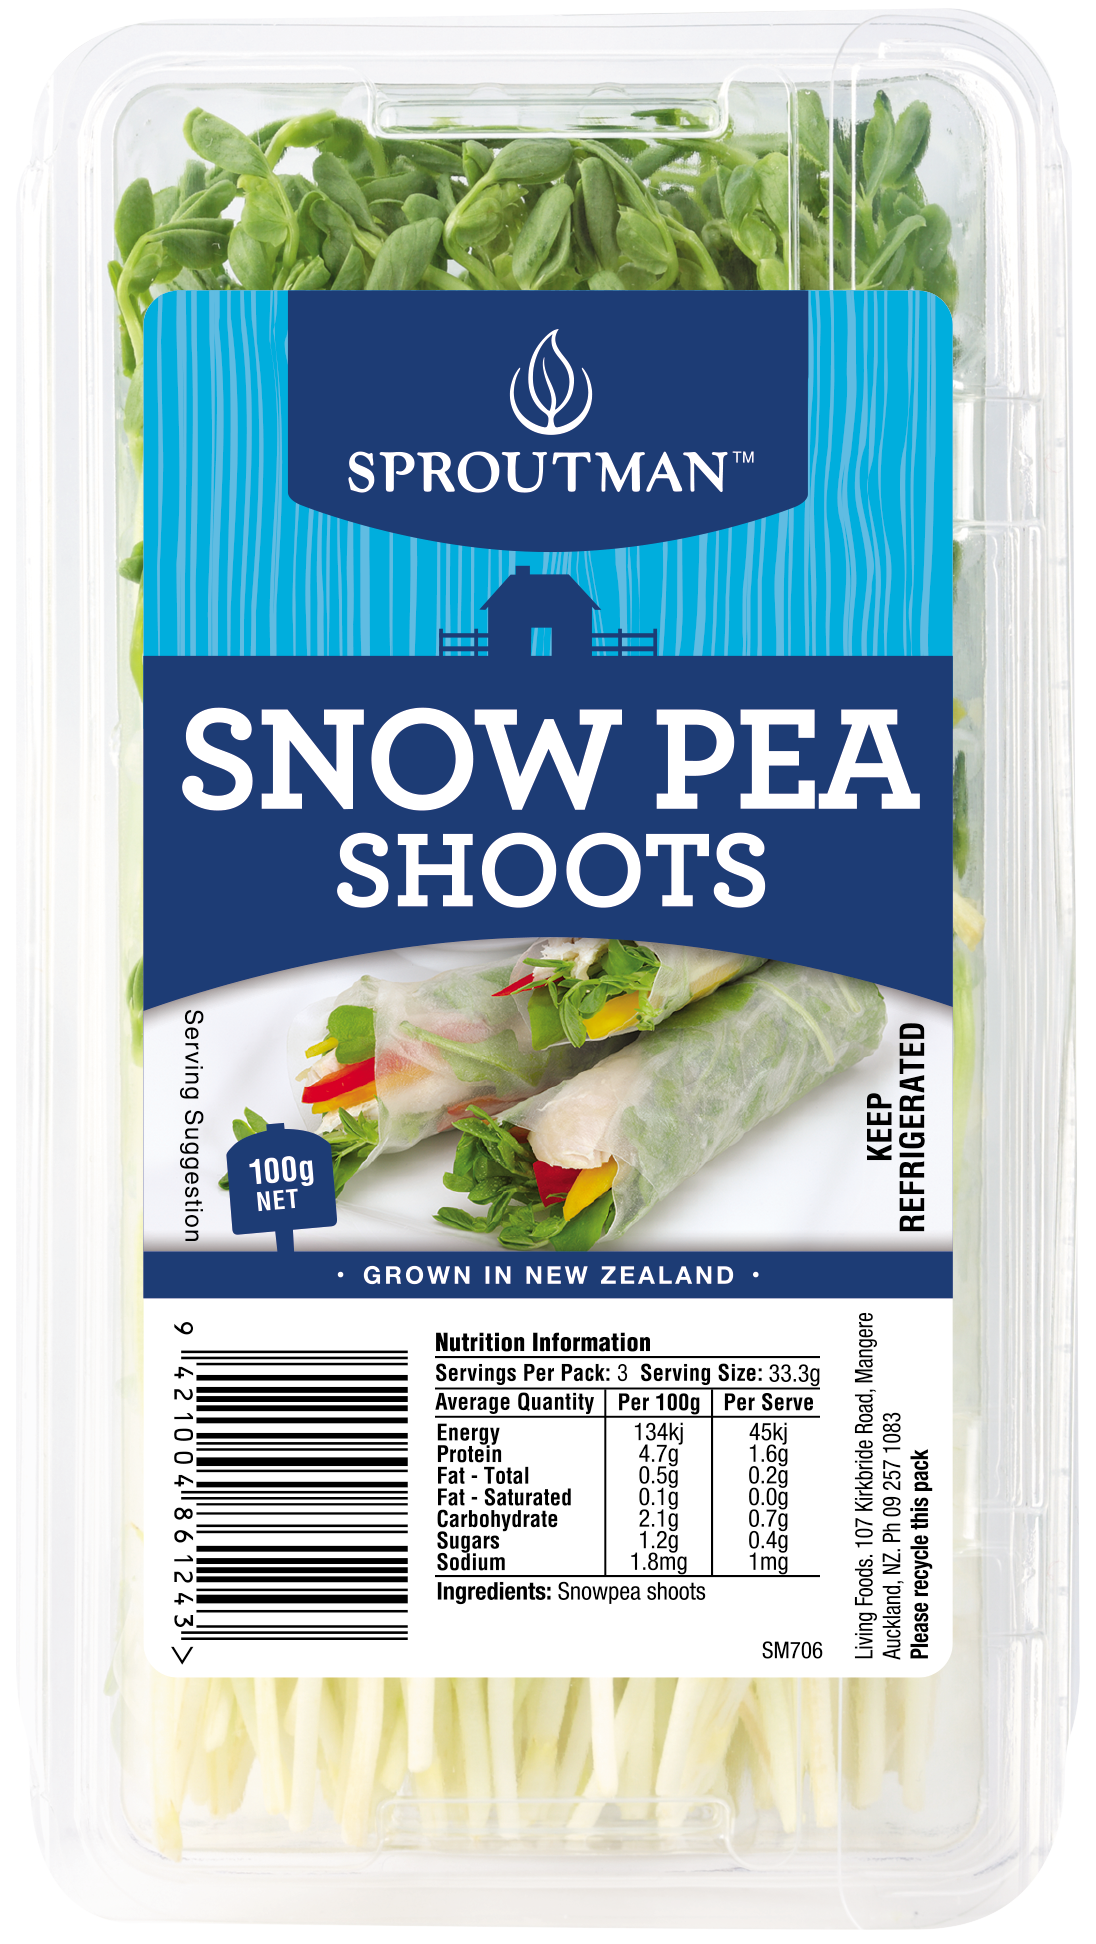 Snow Pea Shoots